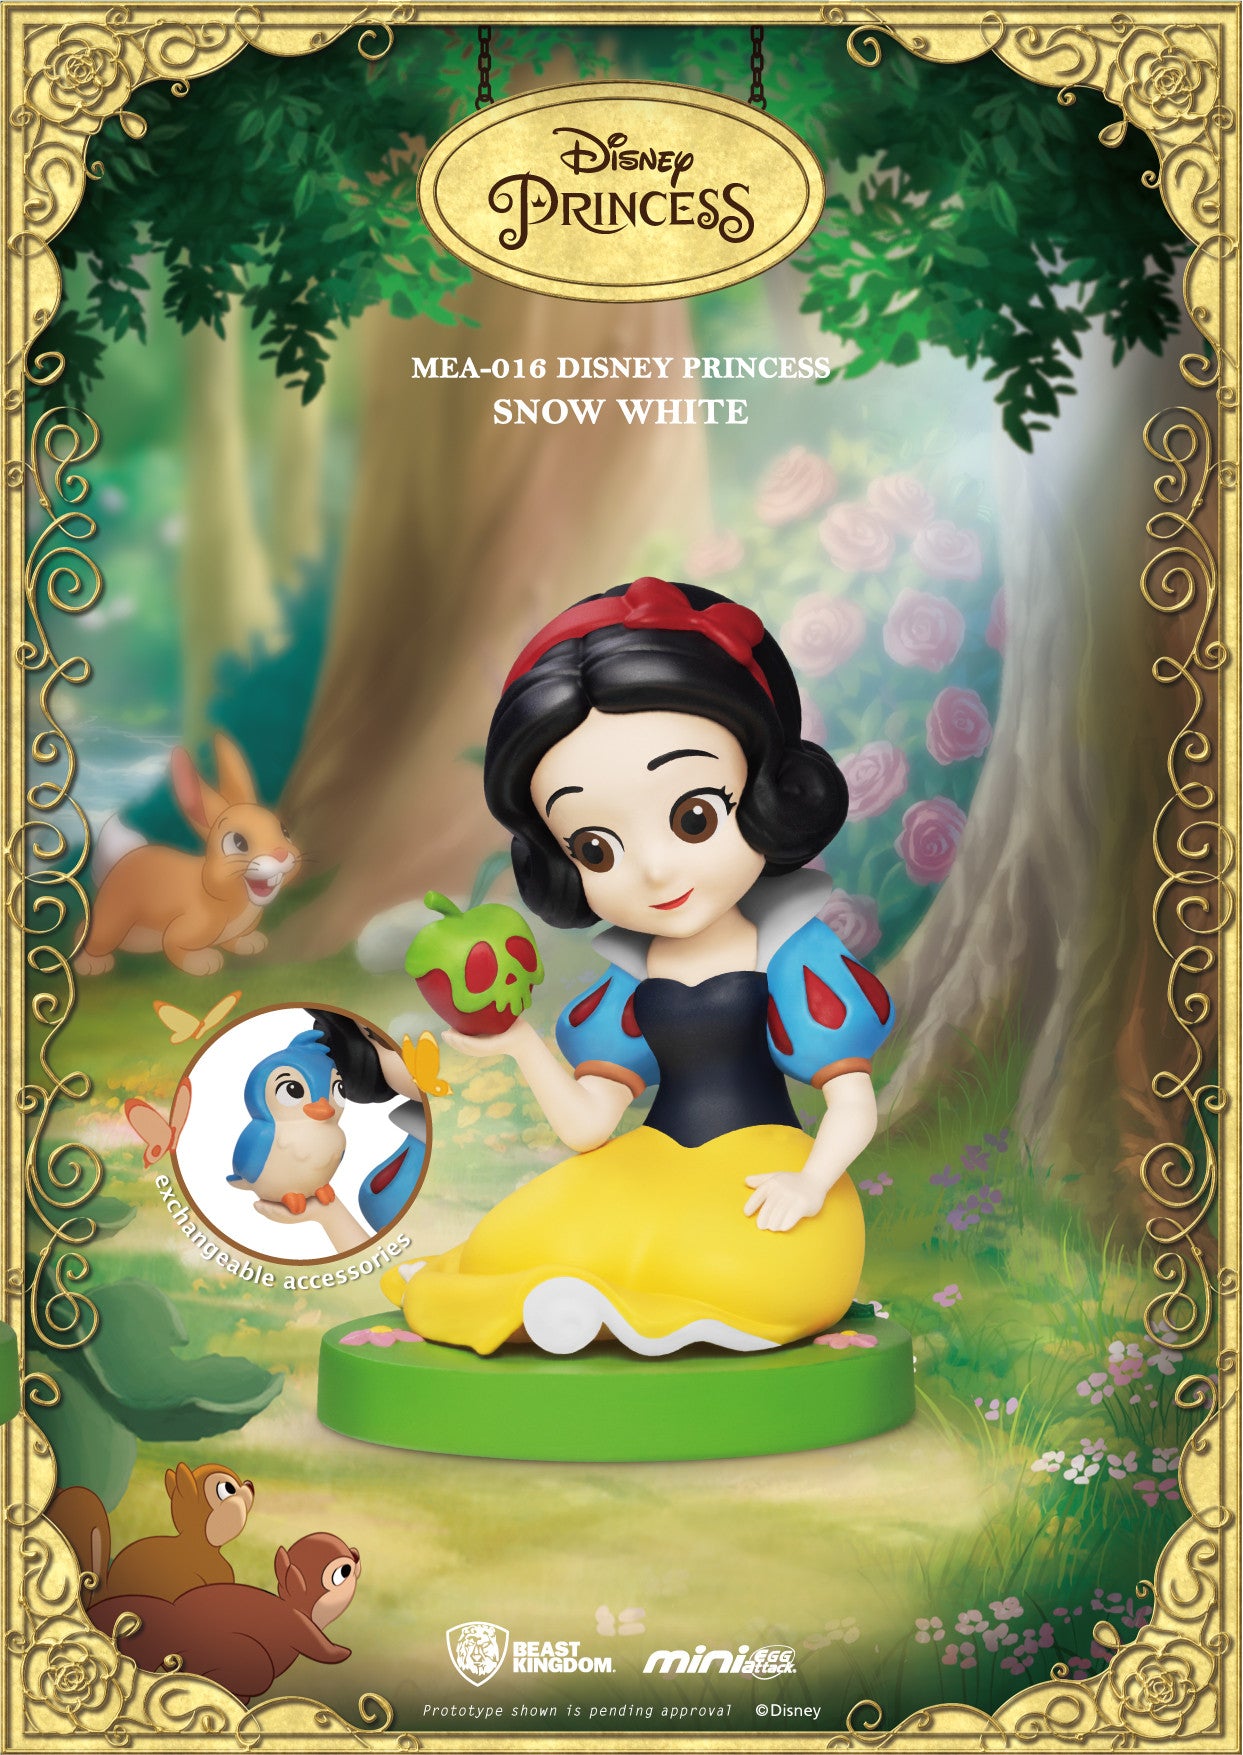 Beast Kingdom Mini Egg Attack Disney Princess Snow White